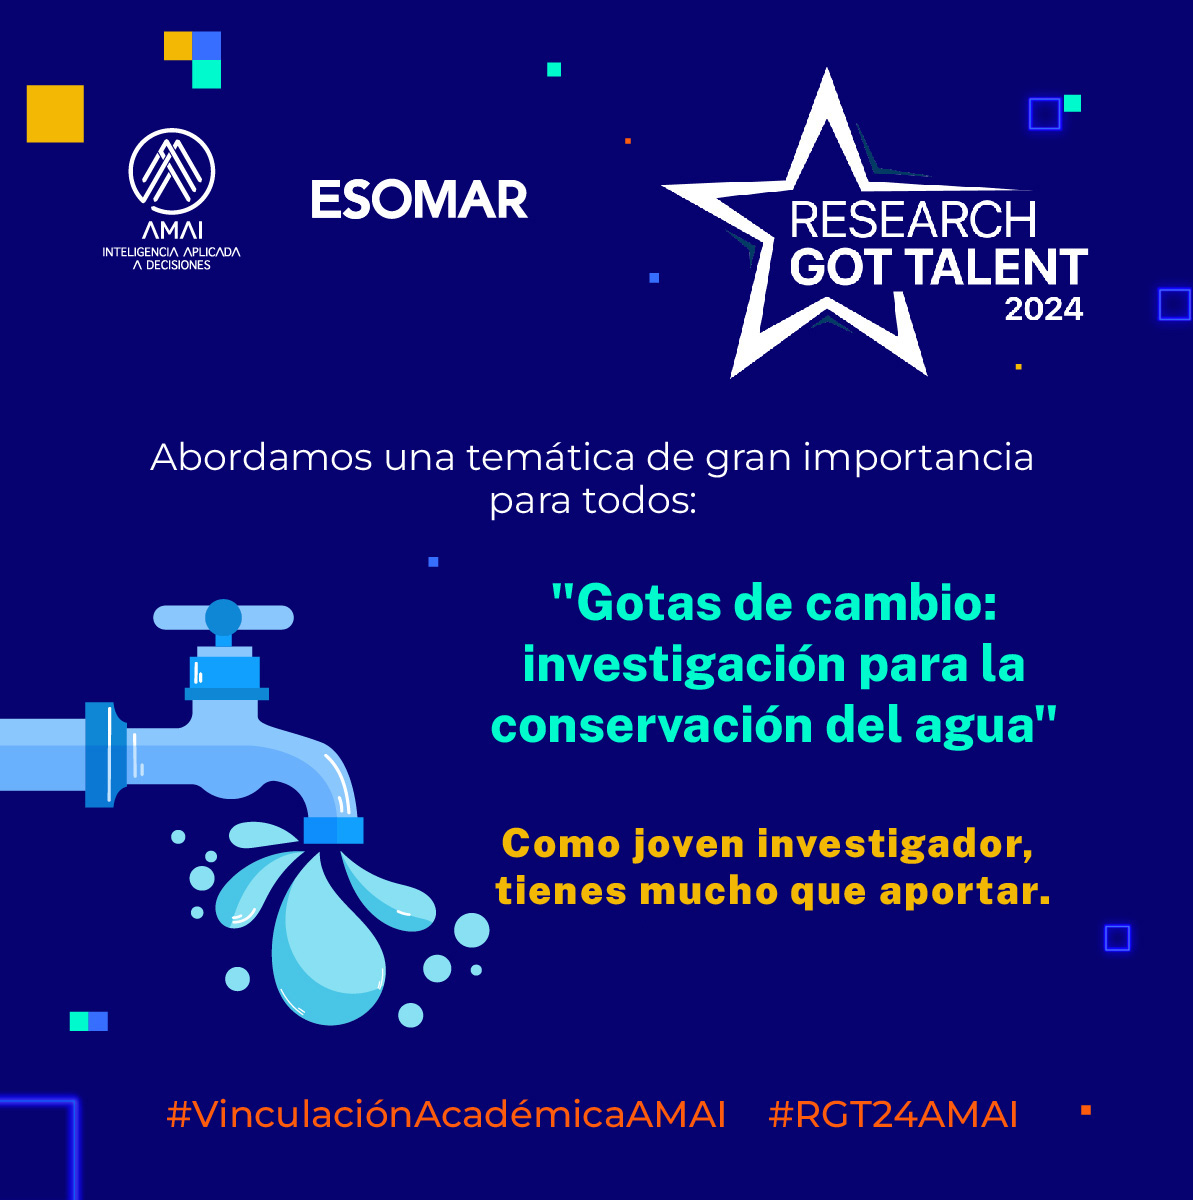 Research Got Talent México 2024 (Amai)